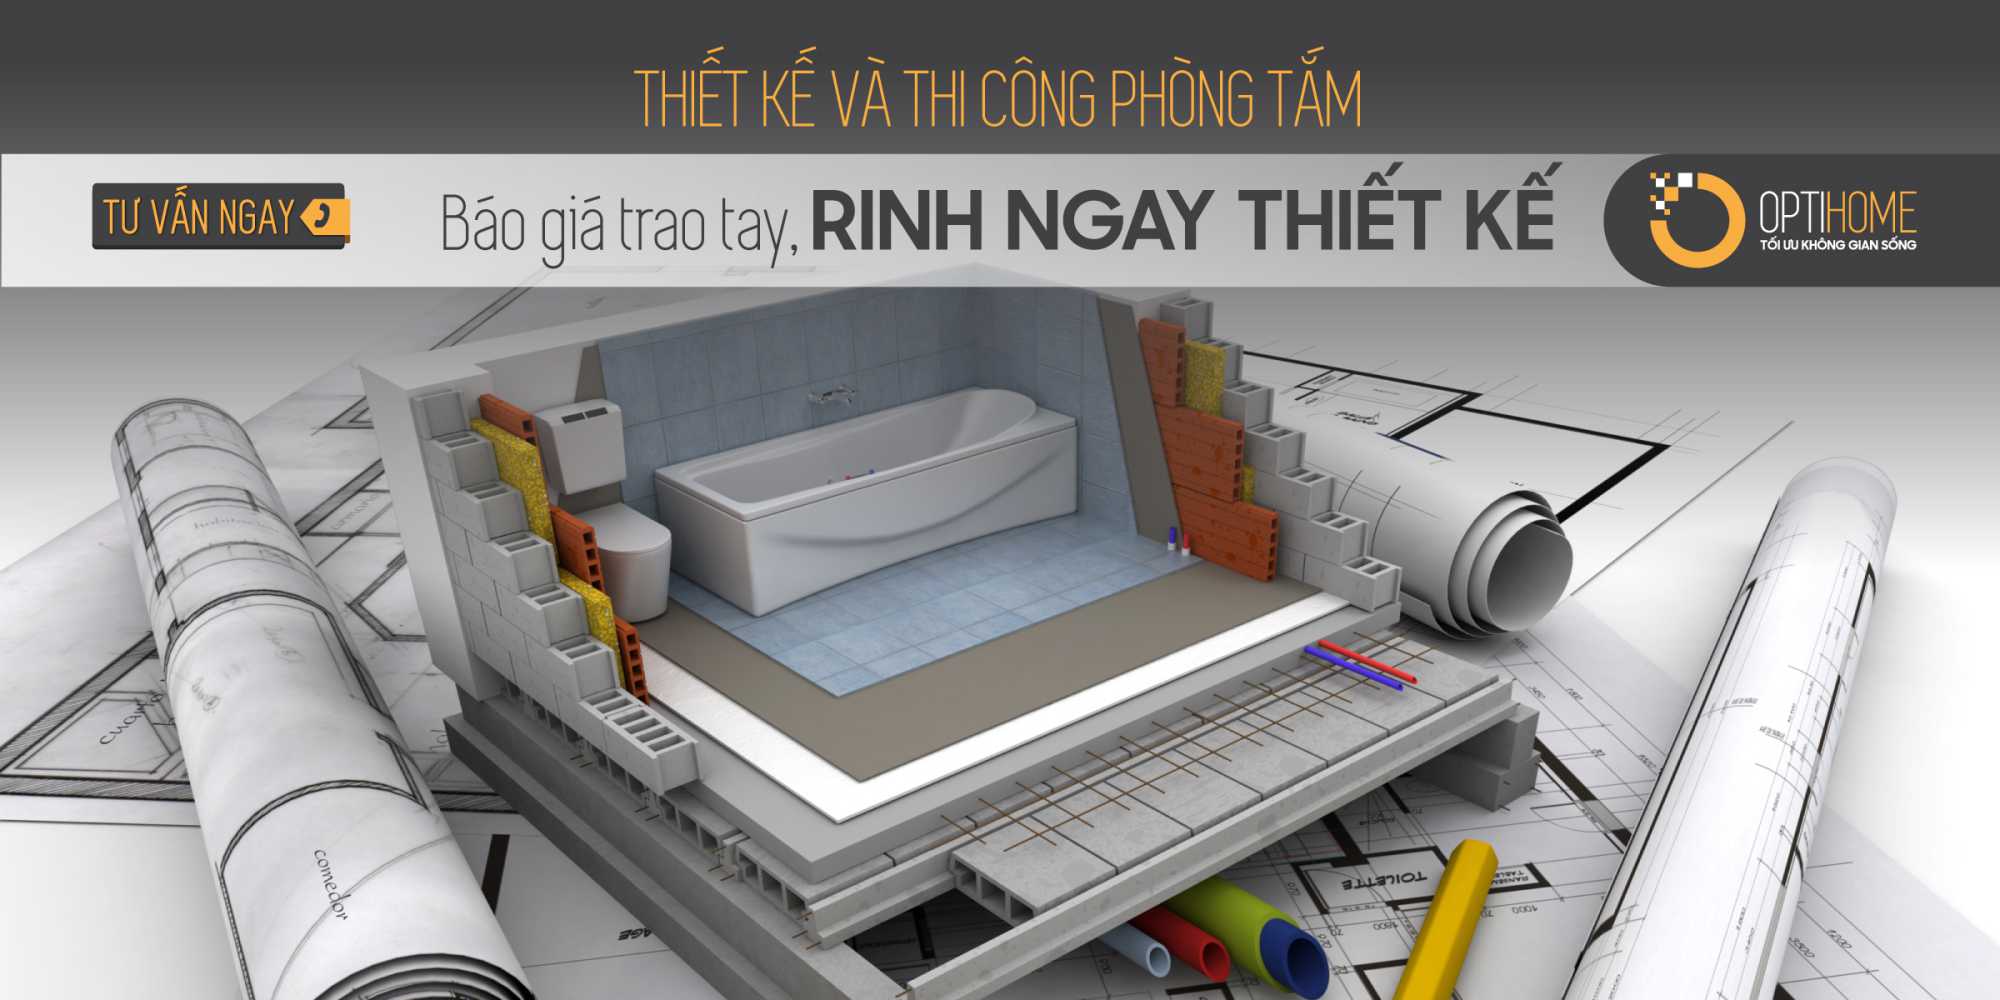 https://optihome.vn/blogs/goc-tu-van/hoan-thien-nha-sang-ron-rang-don-tet